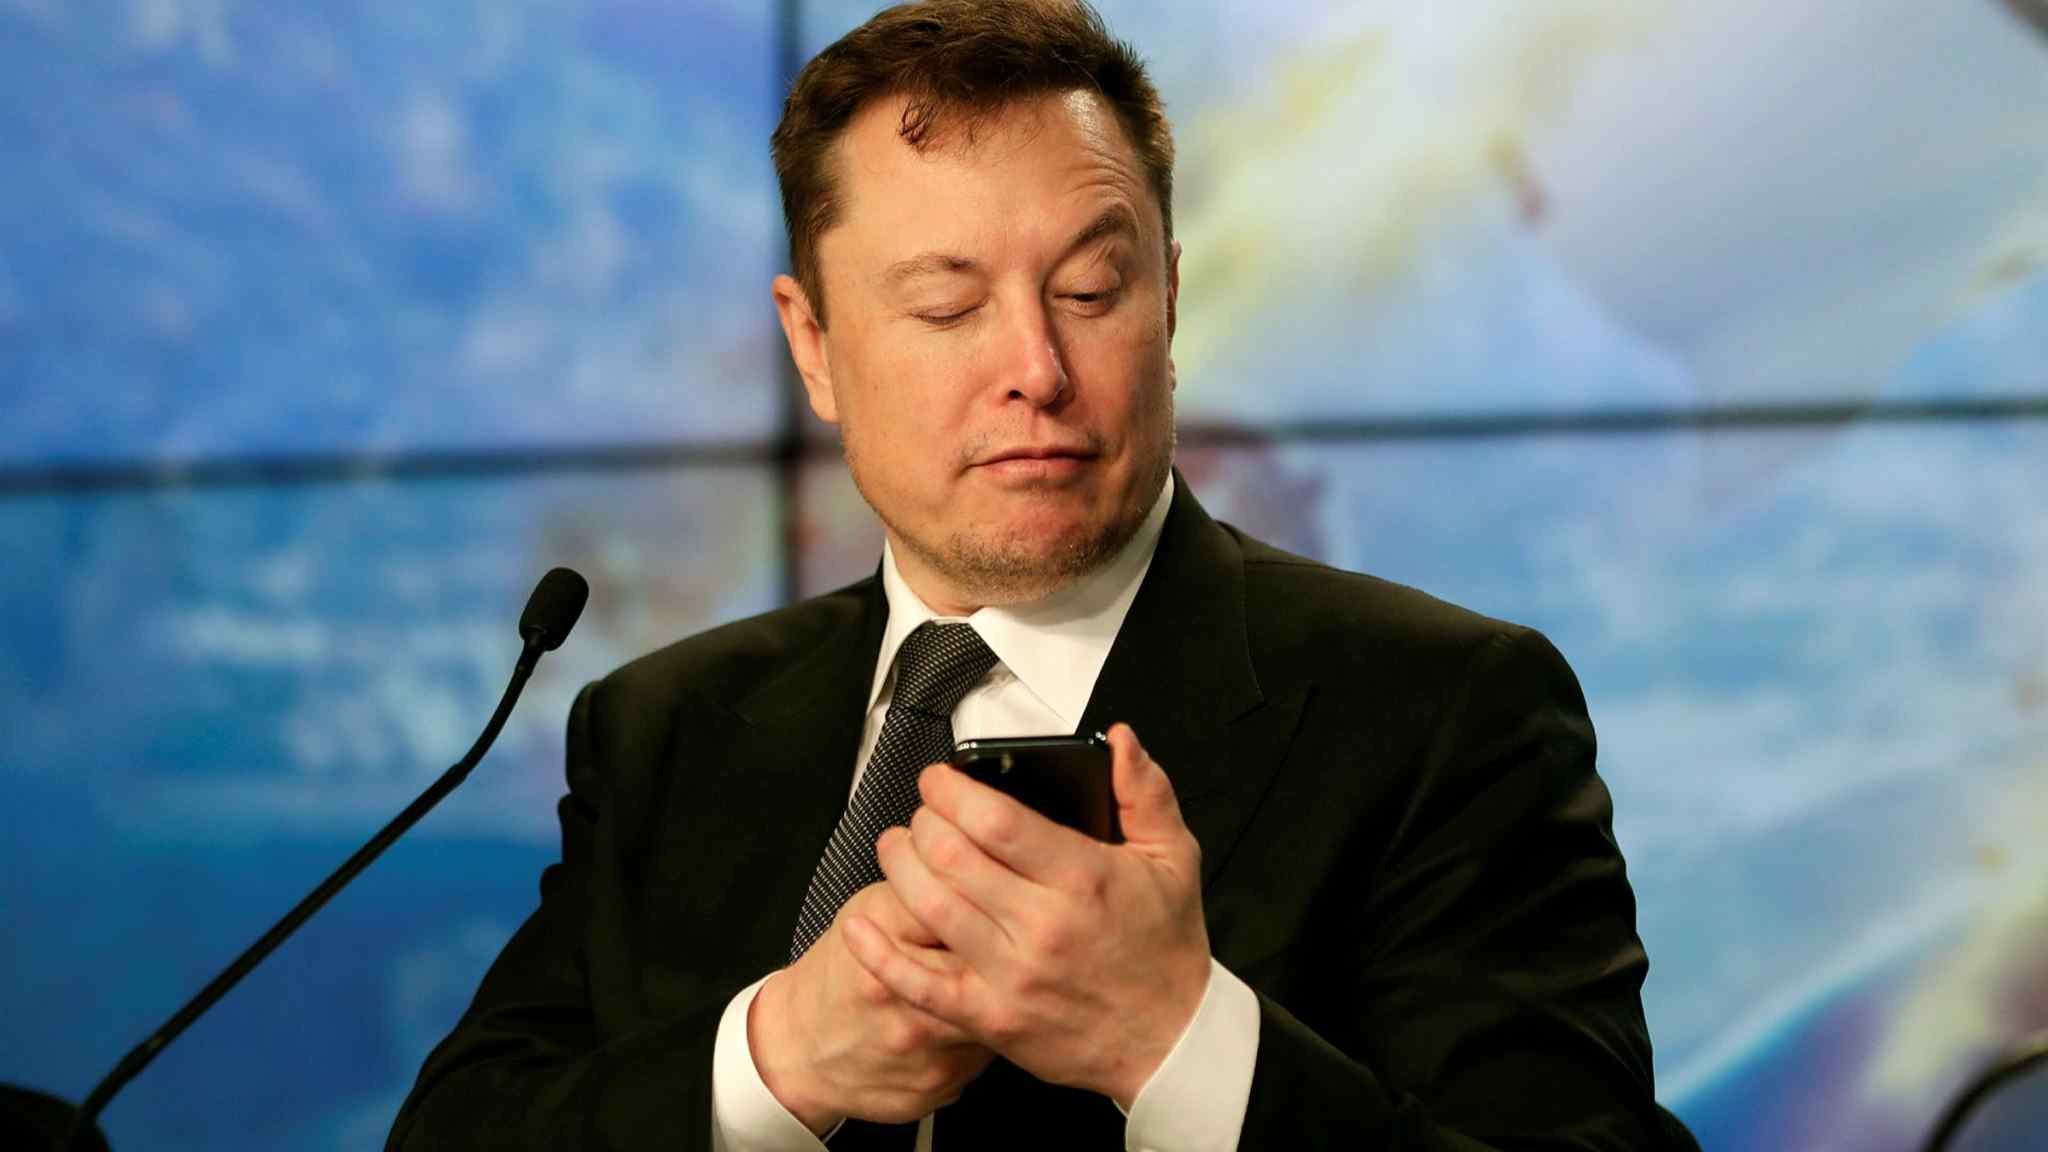 Is Elon Musk too big to regulate?